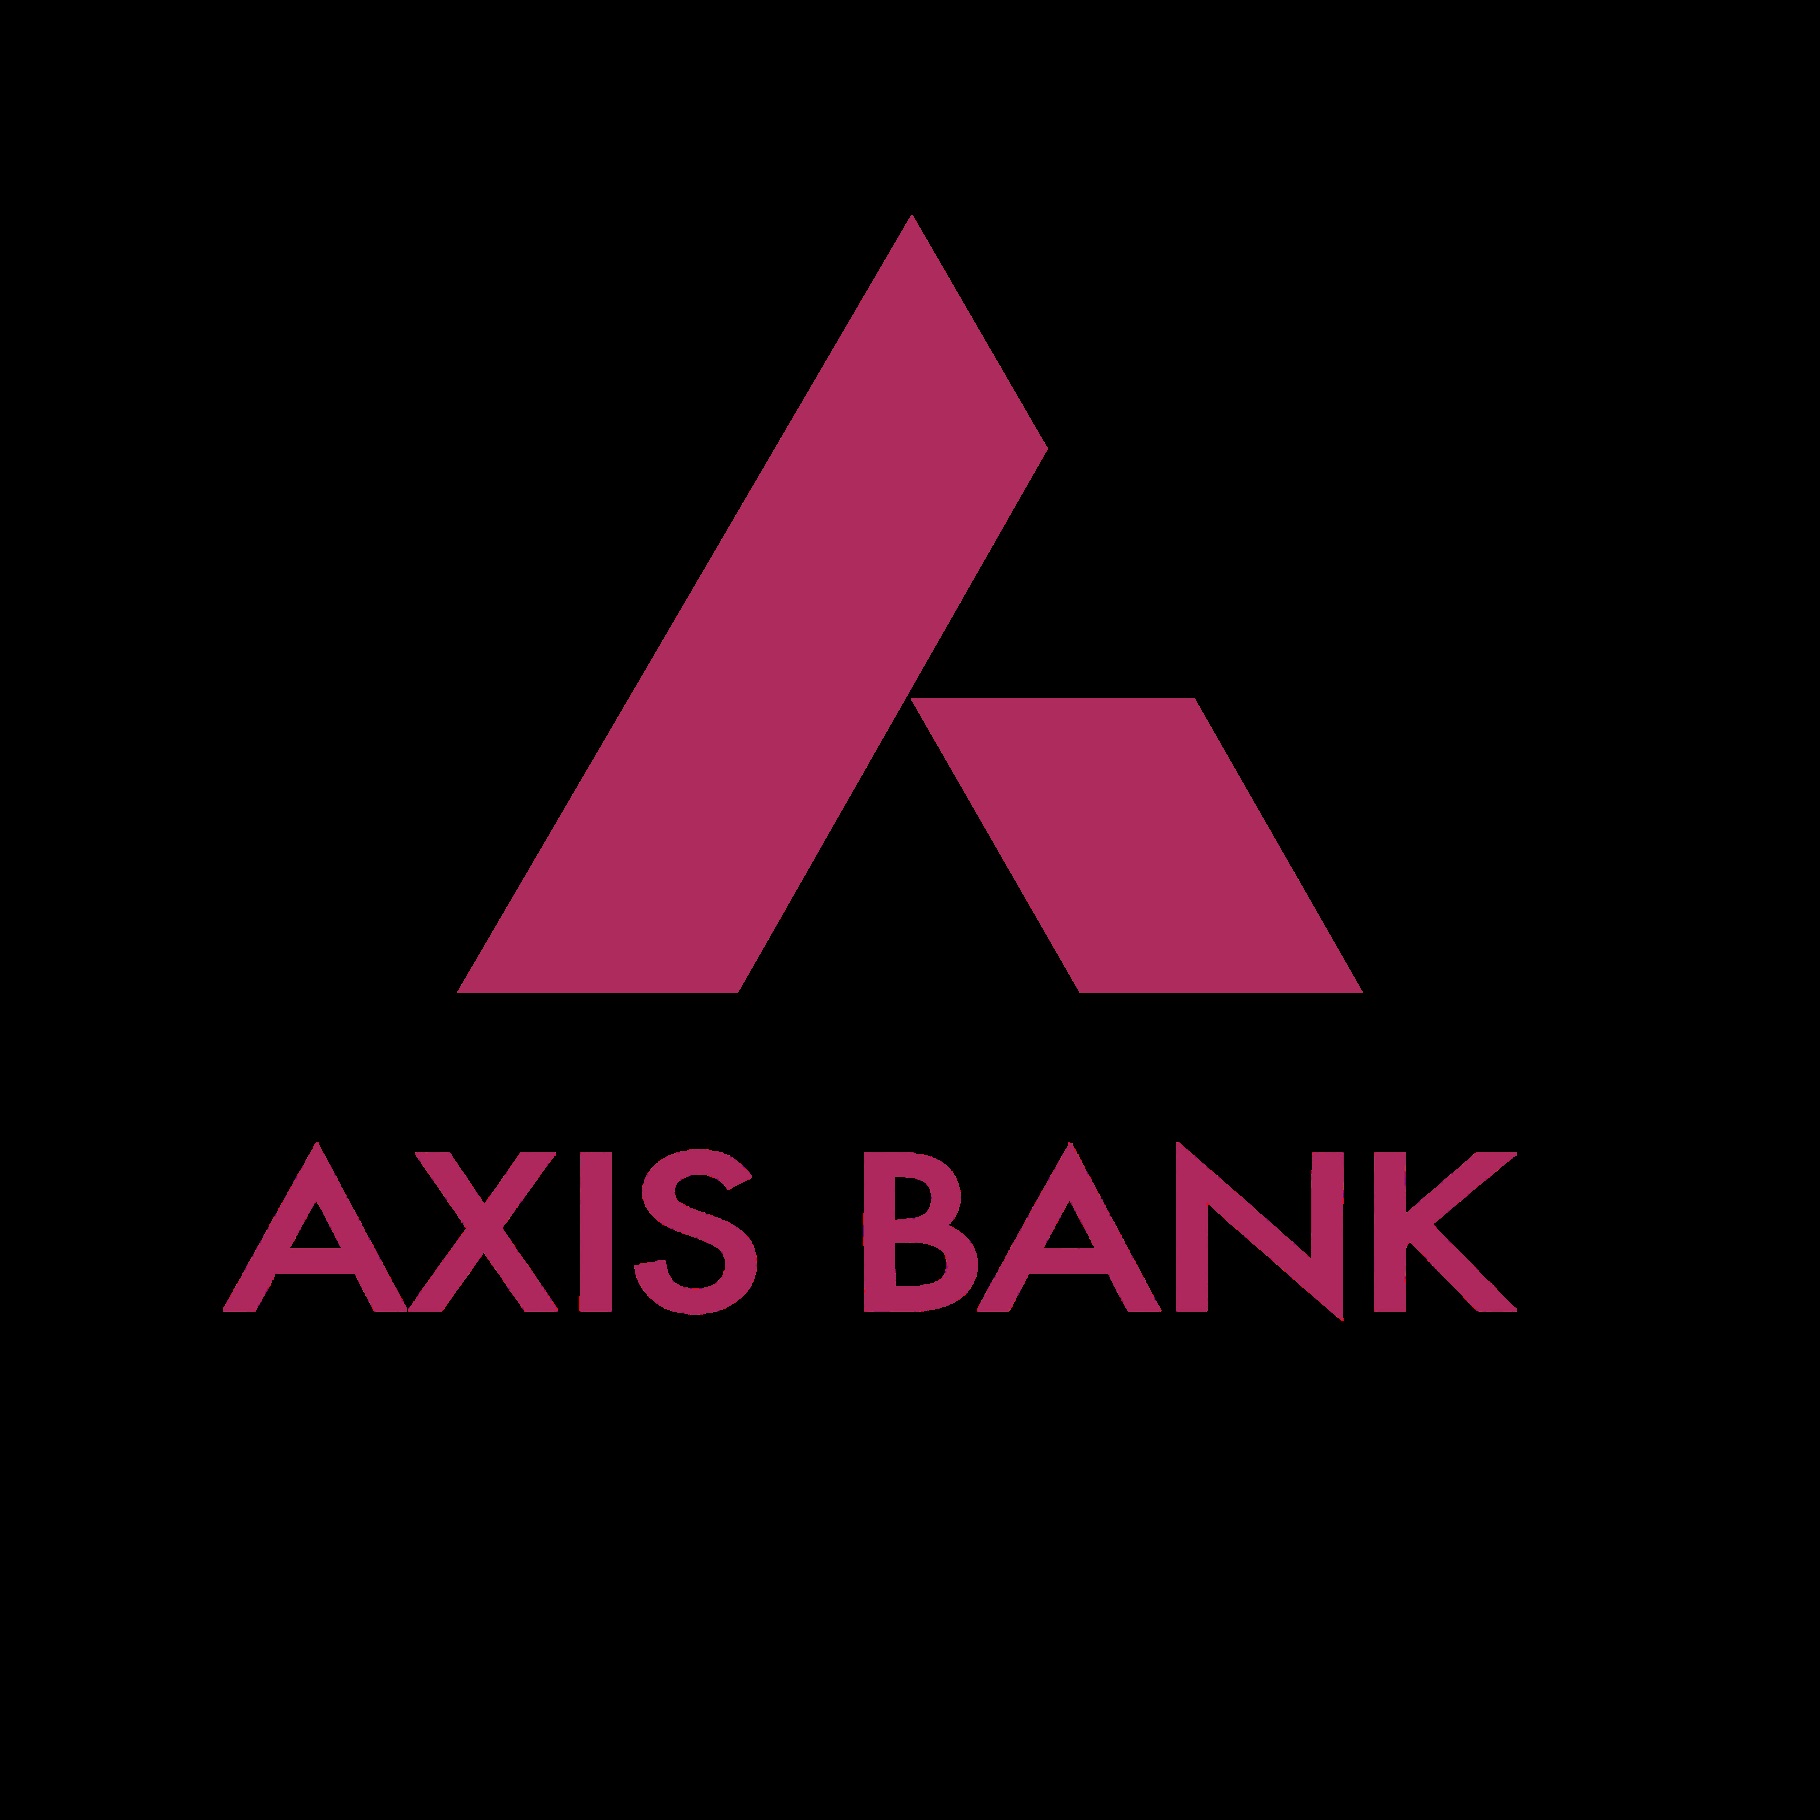 SWOT Analysis Of Axis Bank